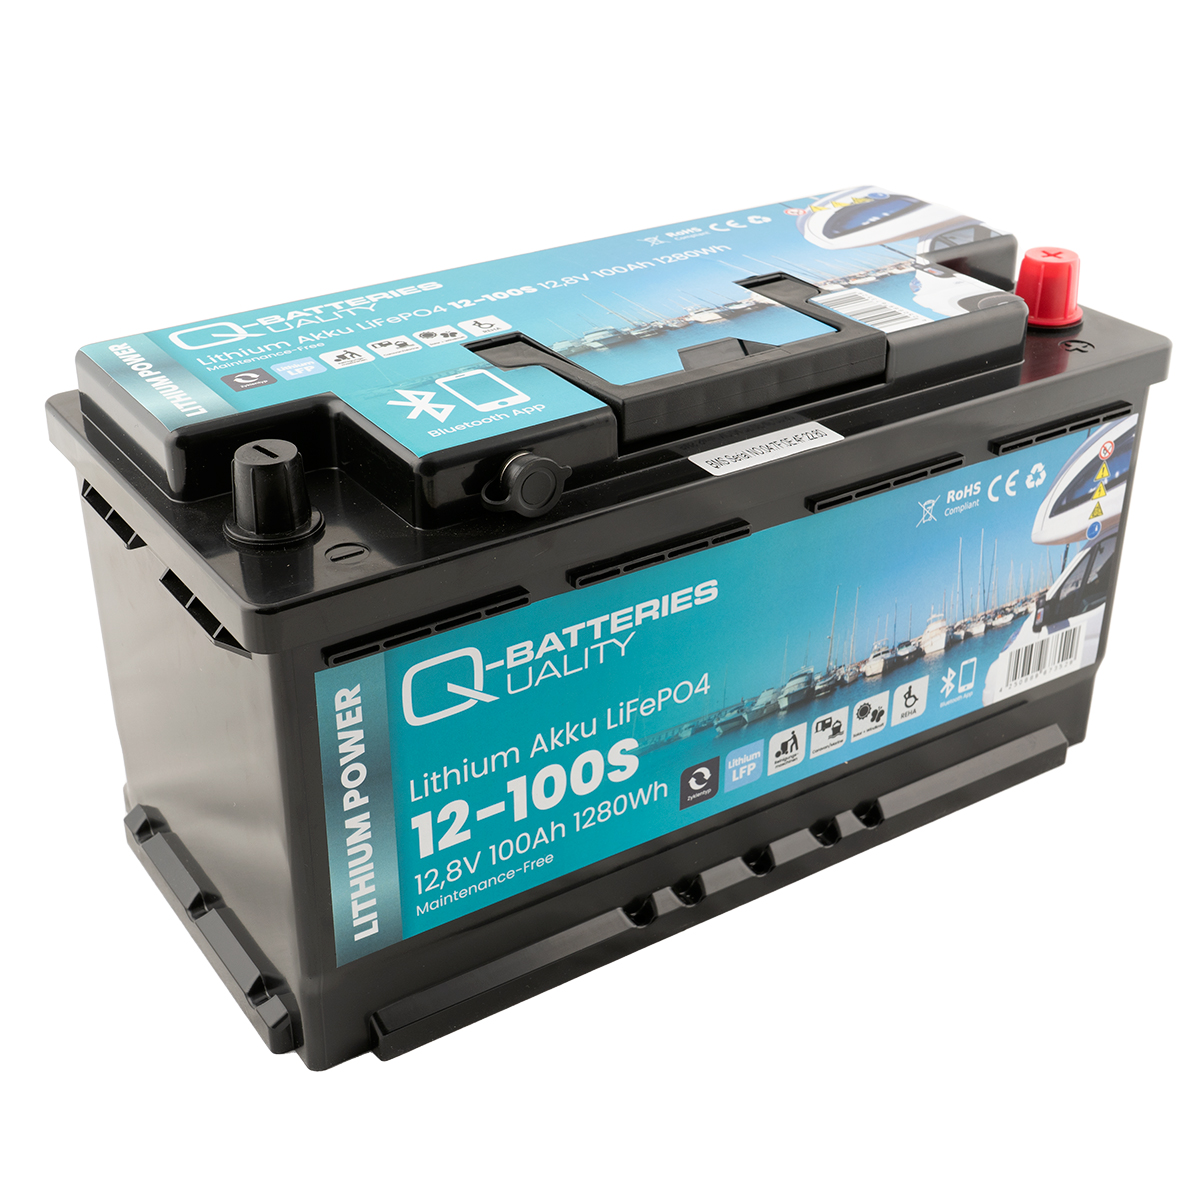 Q-Batteries Lithium Akku 12-100S 12,8V 100Ah 1280Wh LiFePO4 Batterie mit Bluetooth